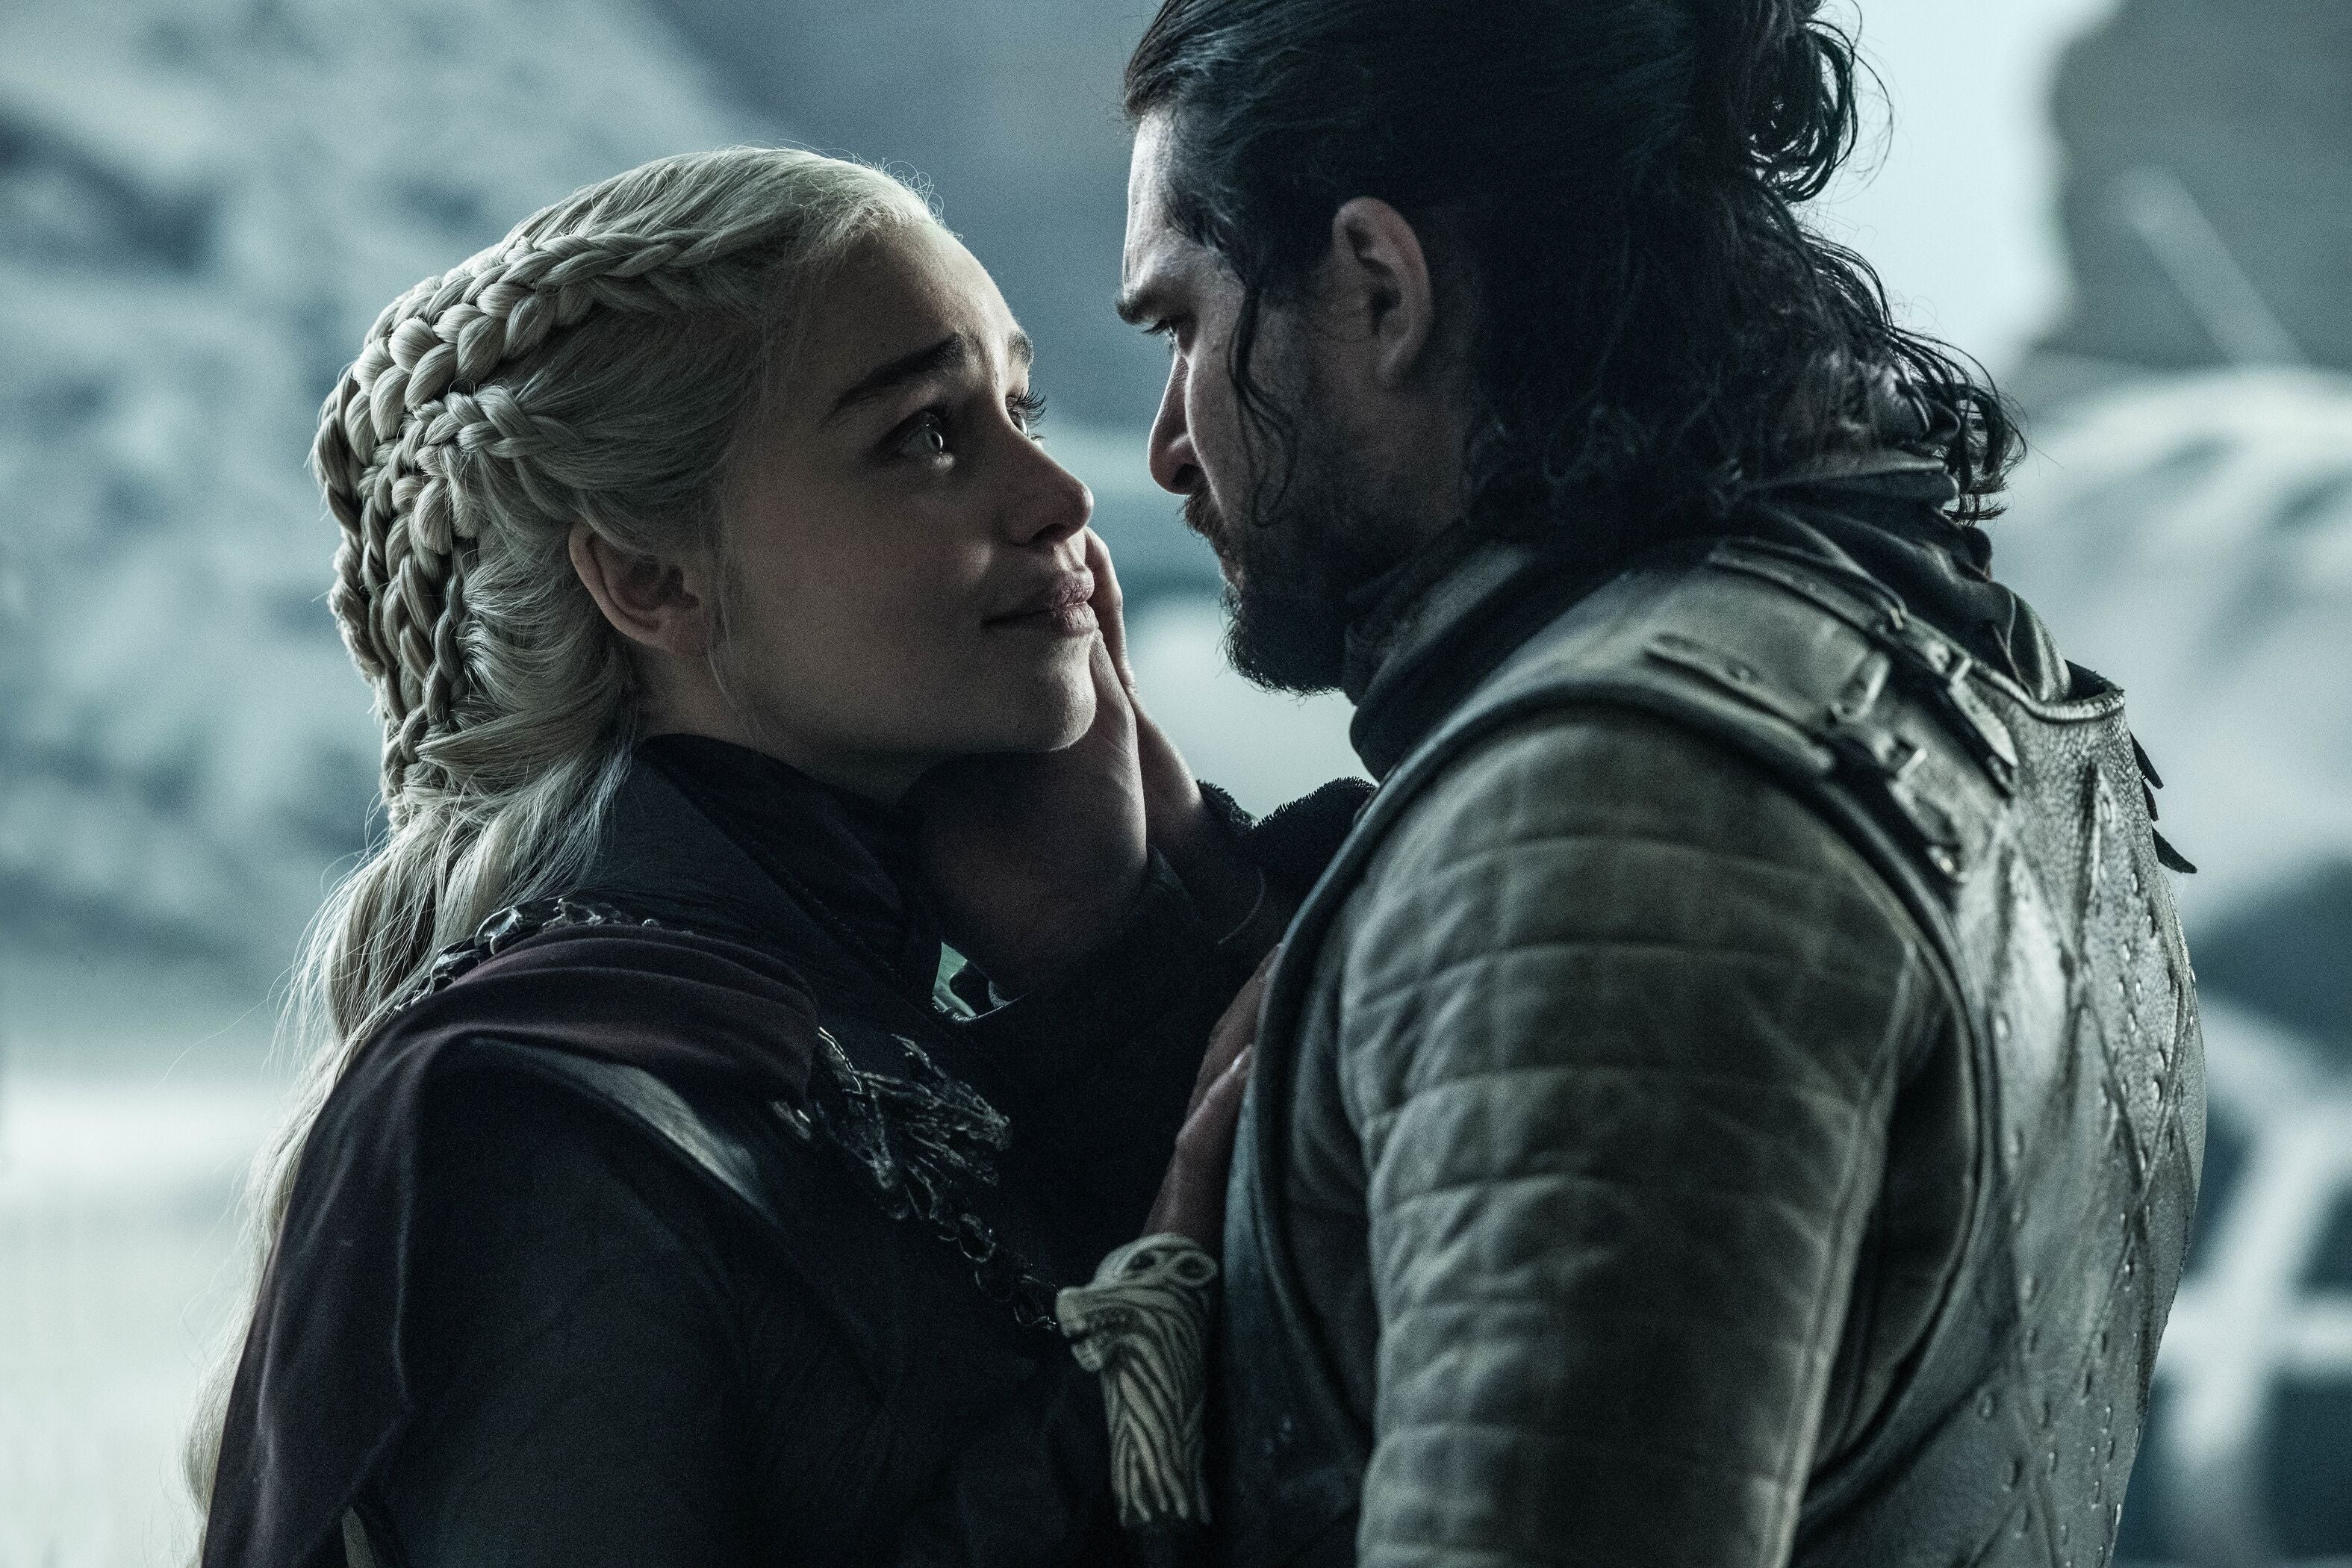 Daenerys Targaryen and Jon Snow embrace in the throne room.